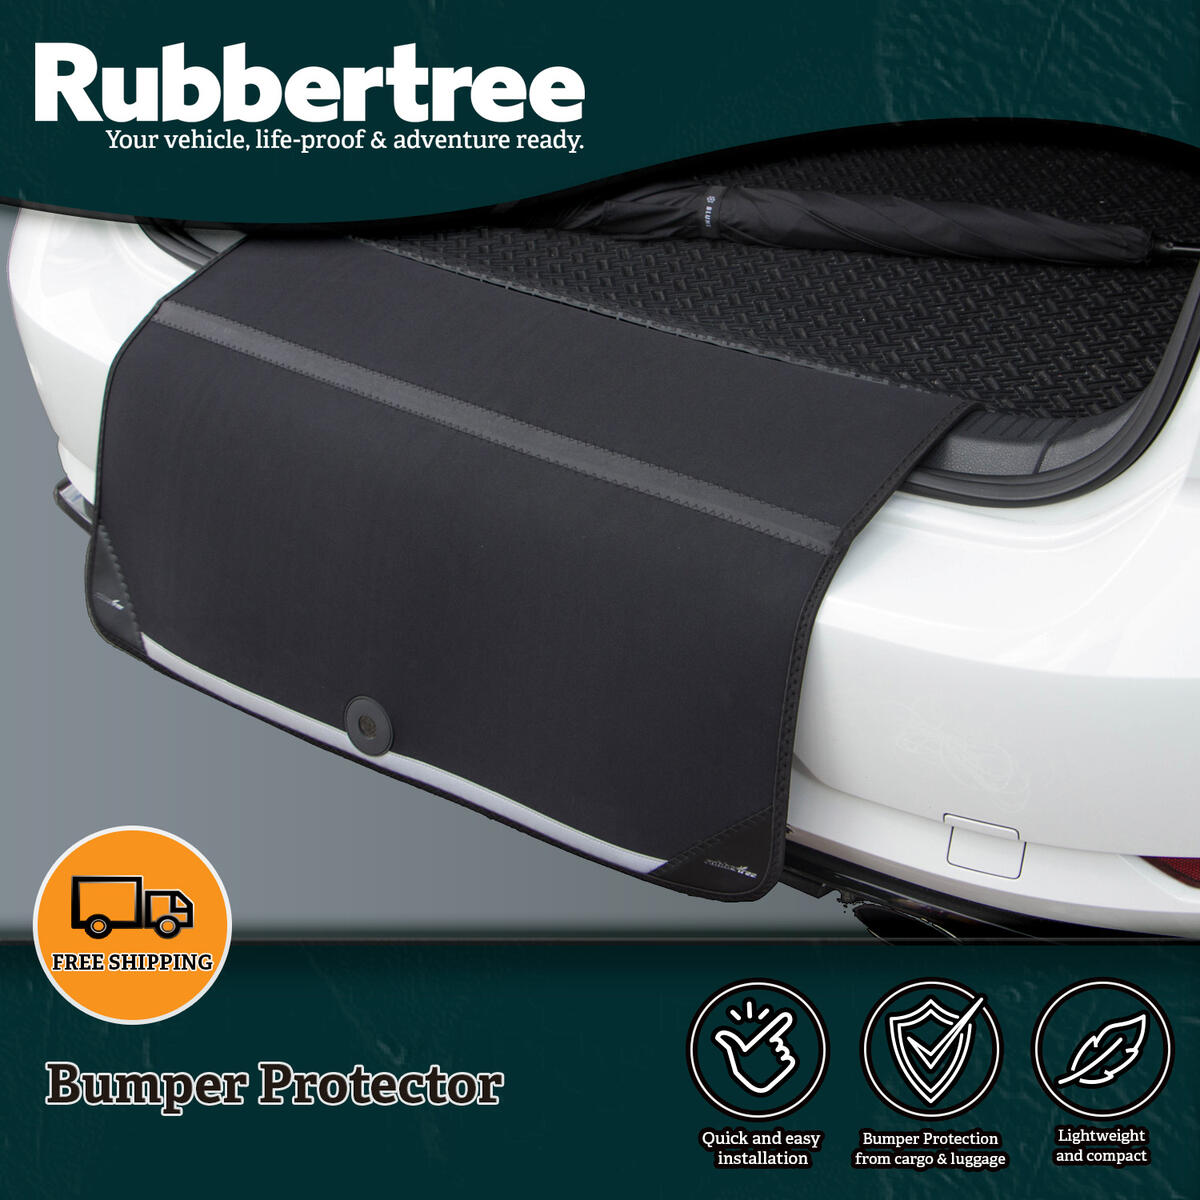 Bumper Protector for RubberTree Bumper Protector